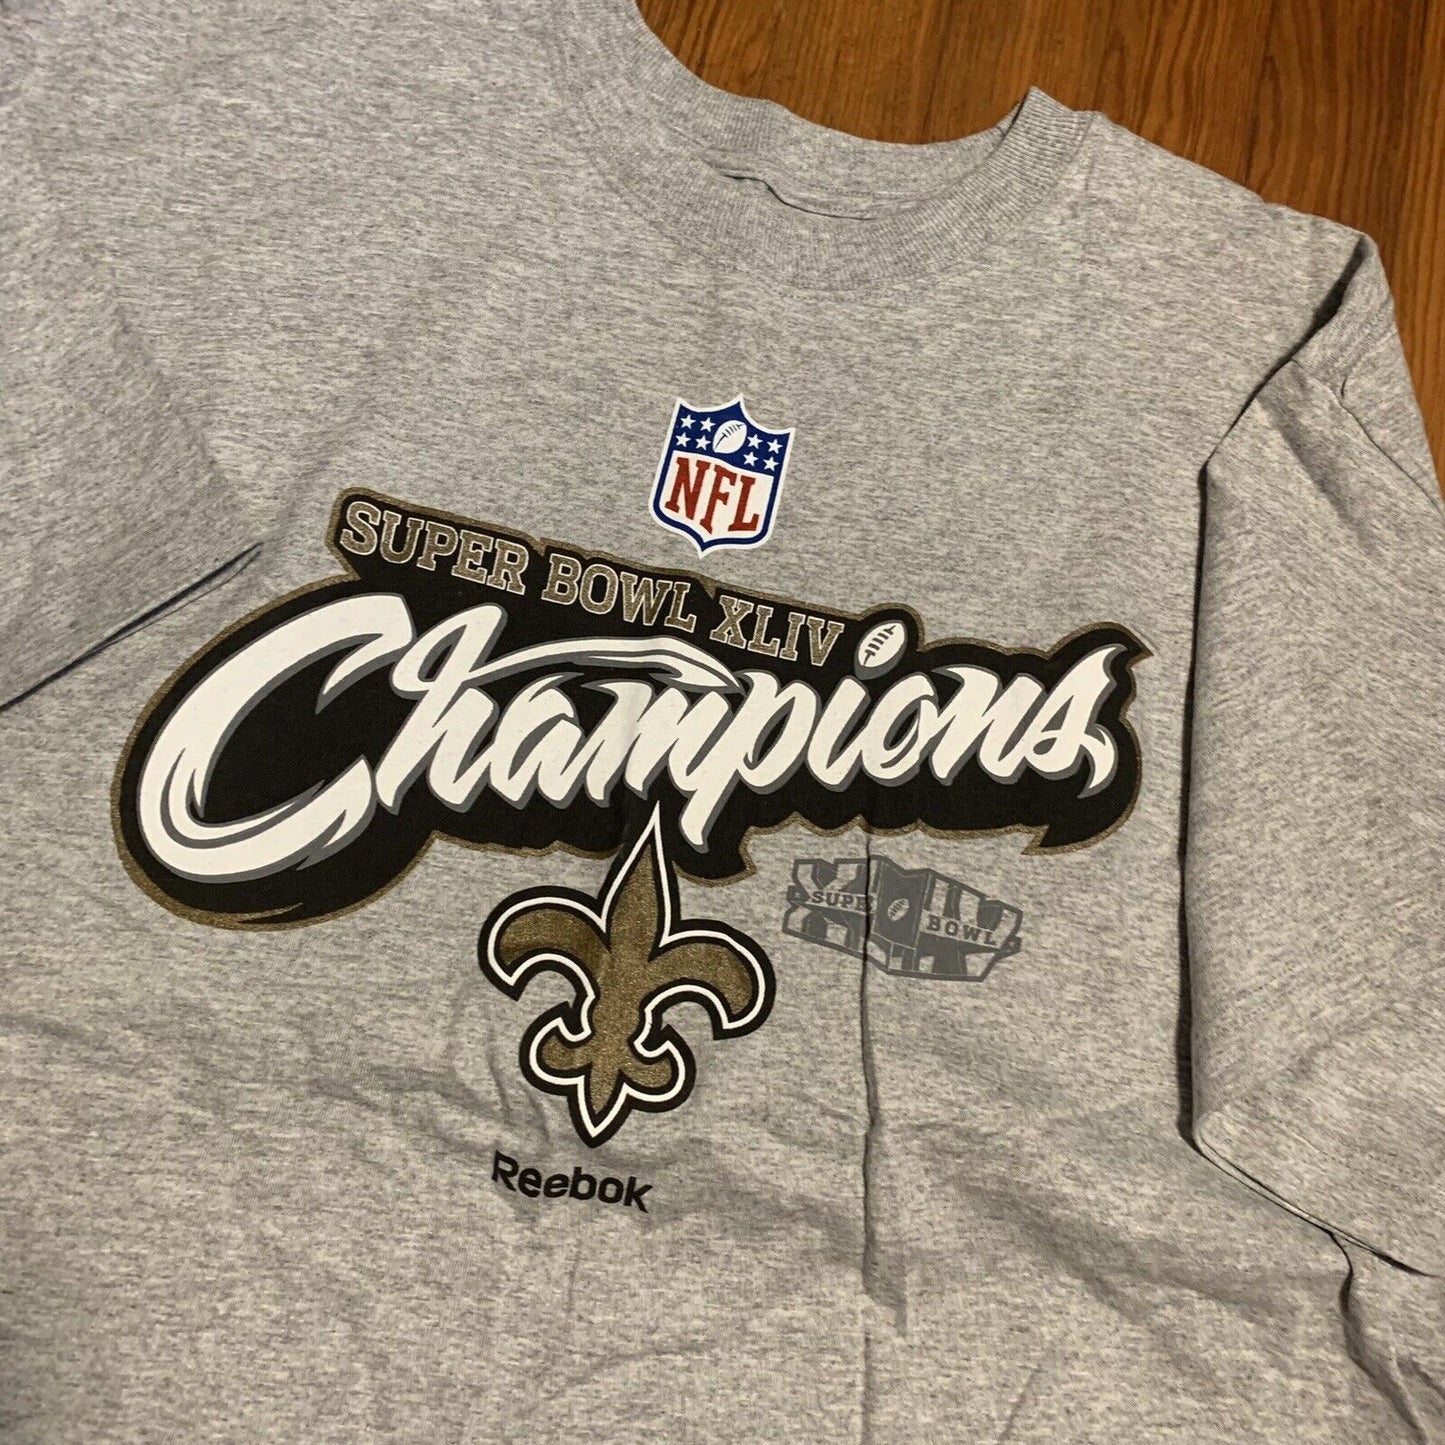 New Orleans Saints Super Bowl XLIV Champions Reebok T-Shirt Size Men’s XL Gray